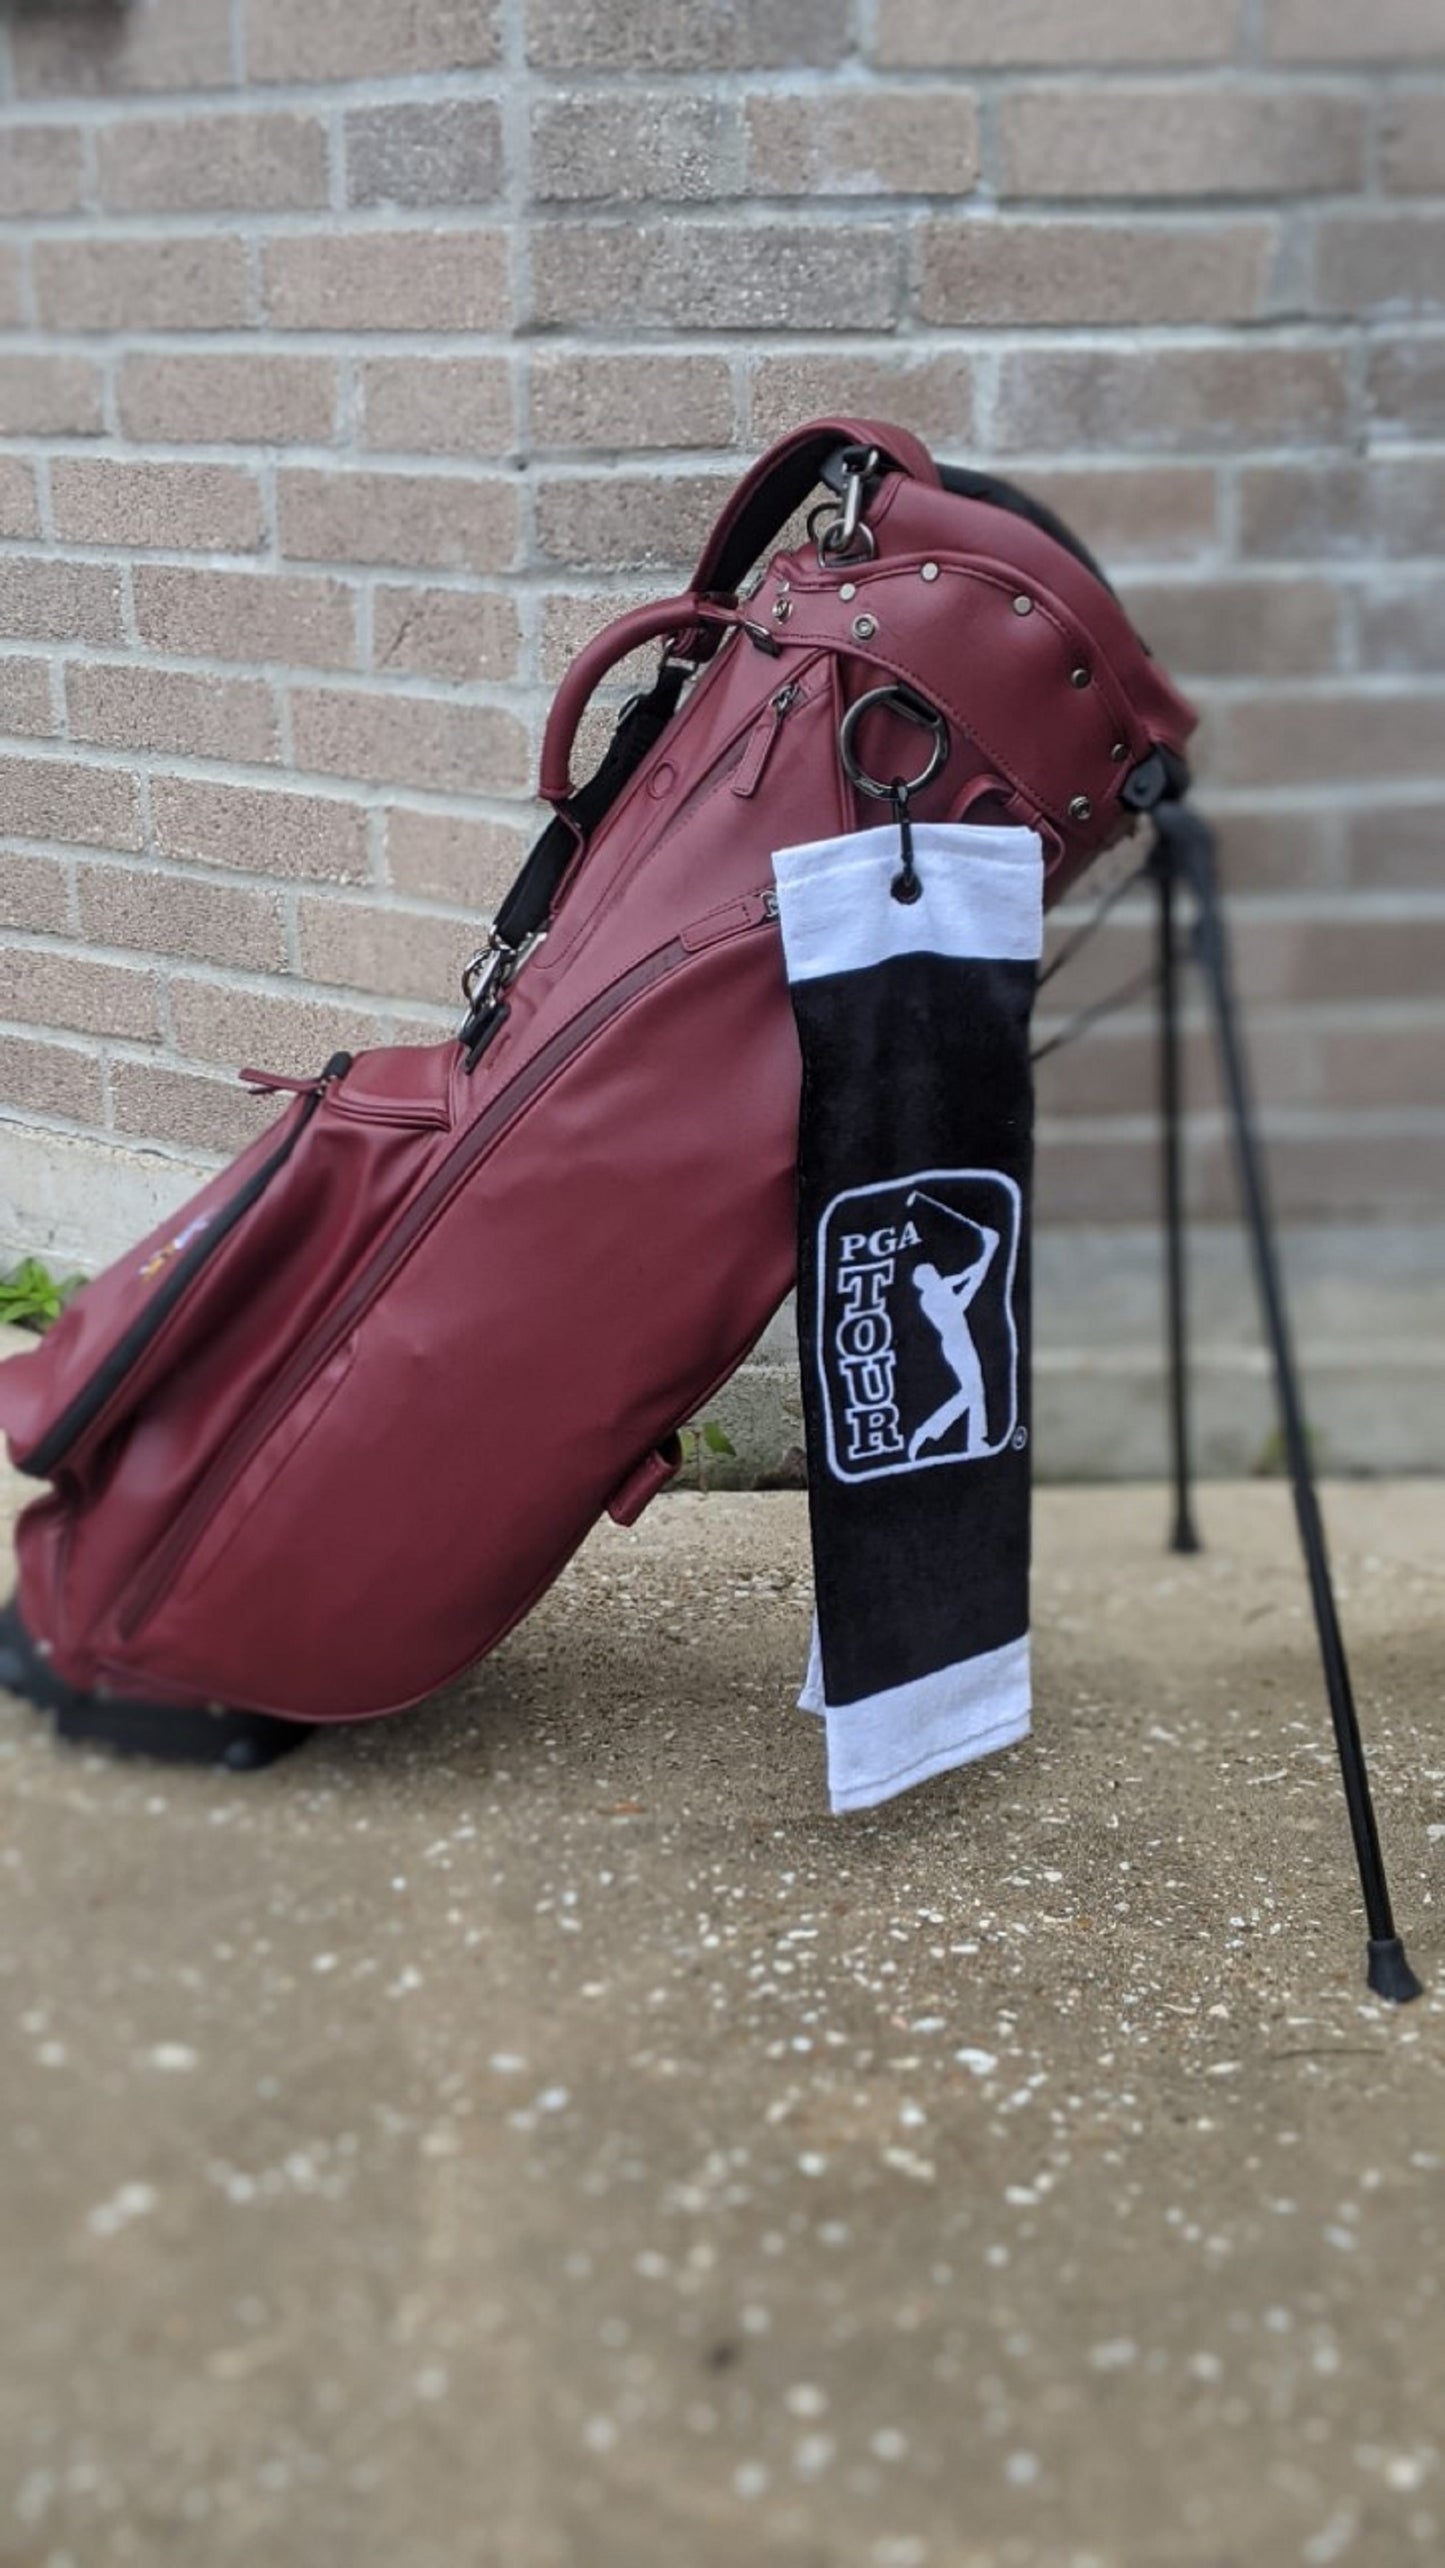 PGA Golf Towel-Black & White-Monogramming Available